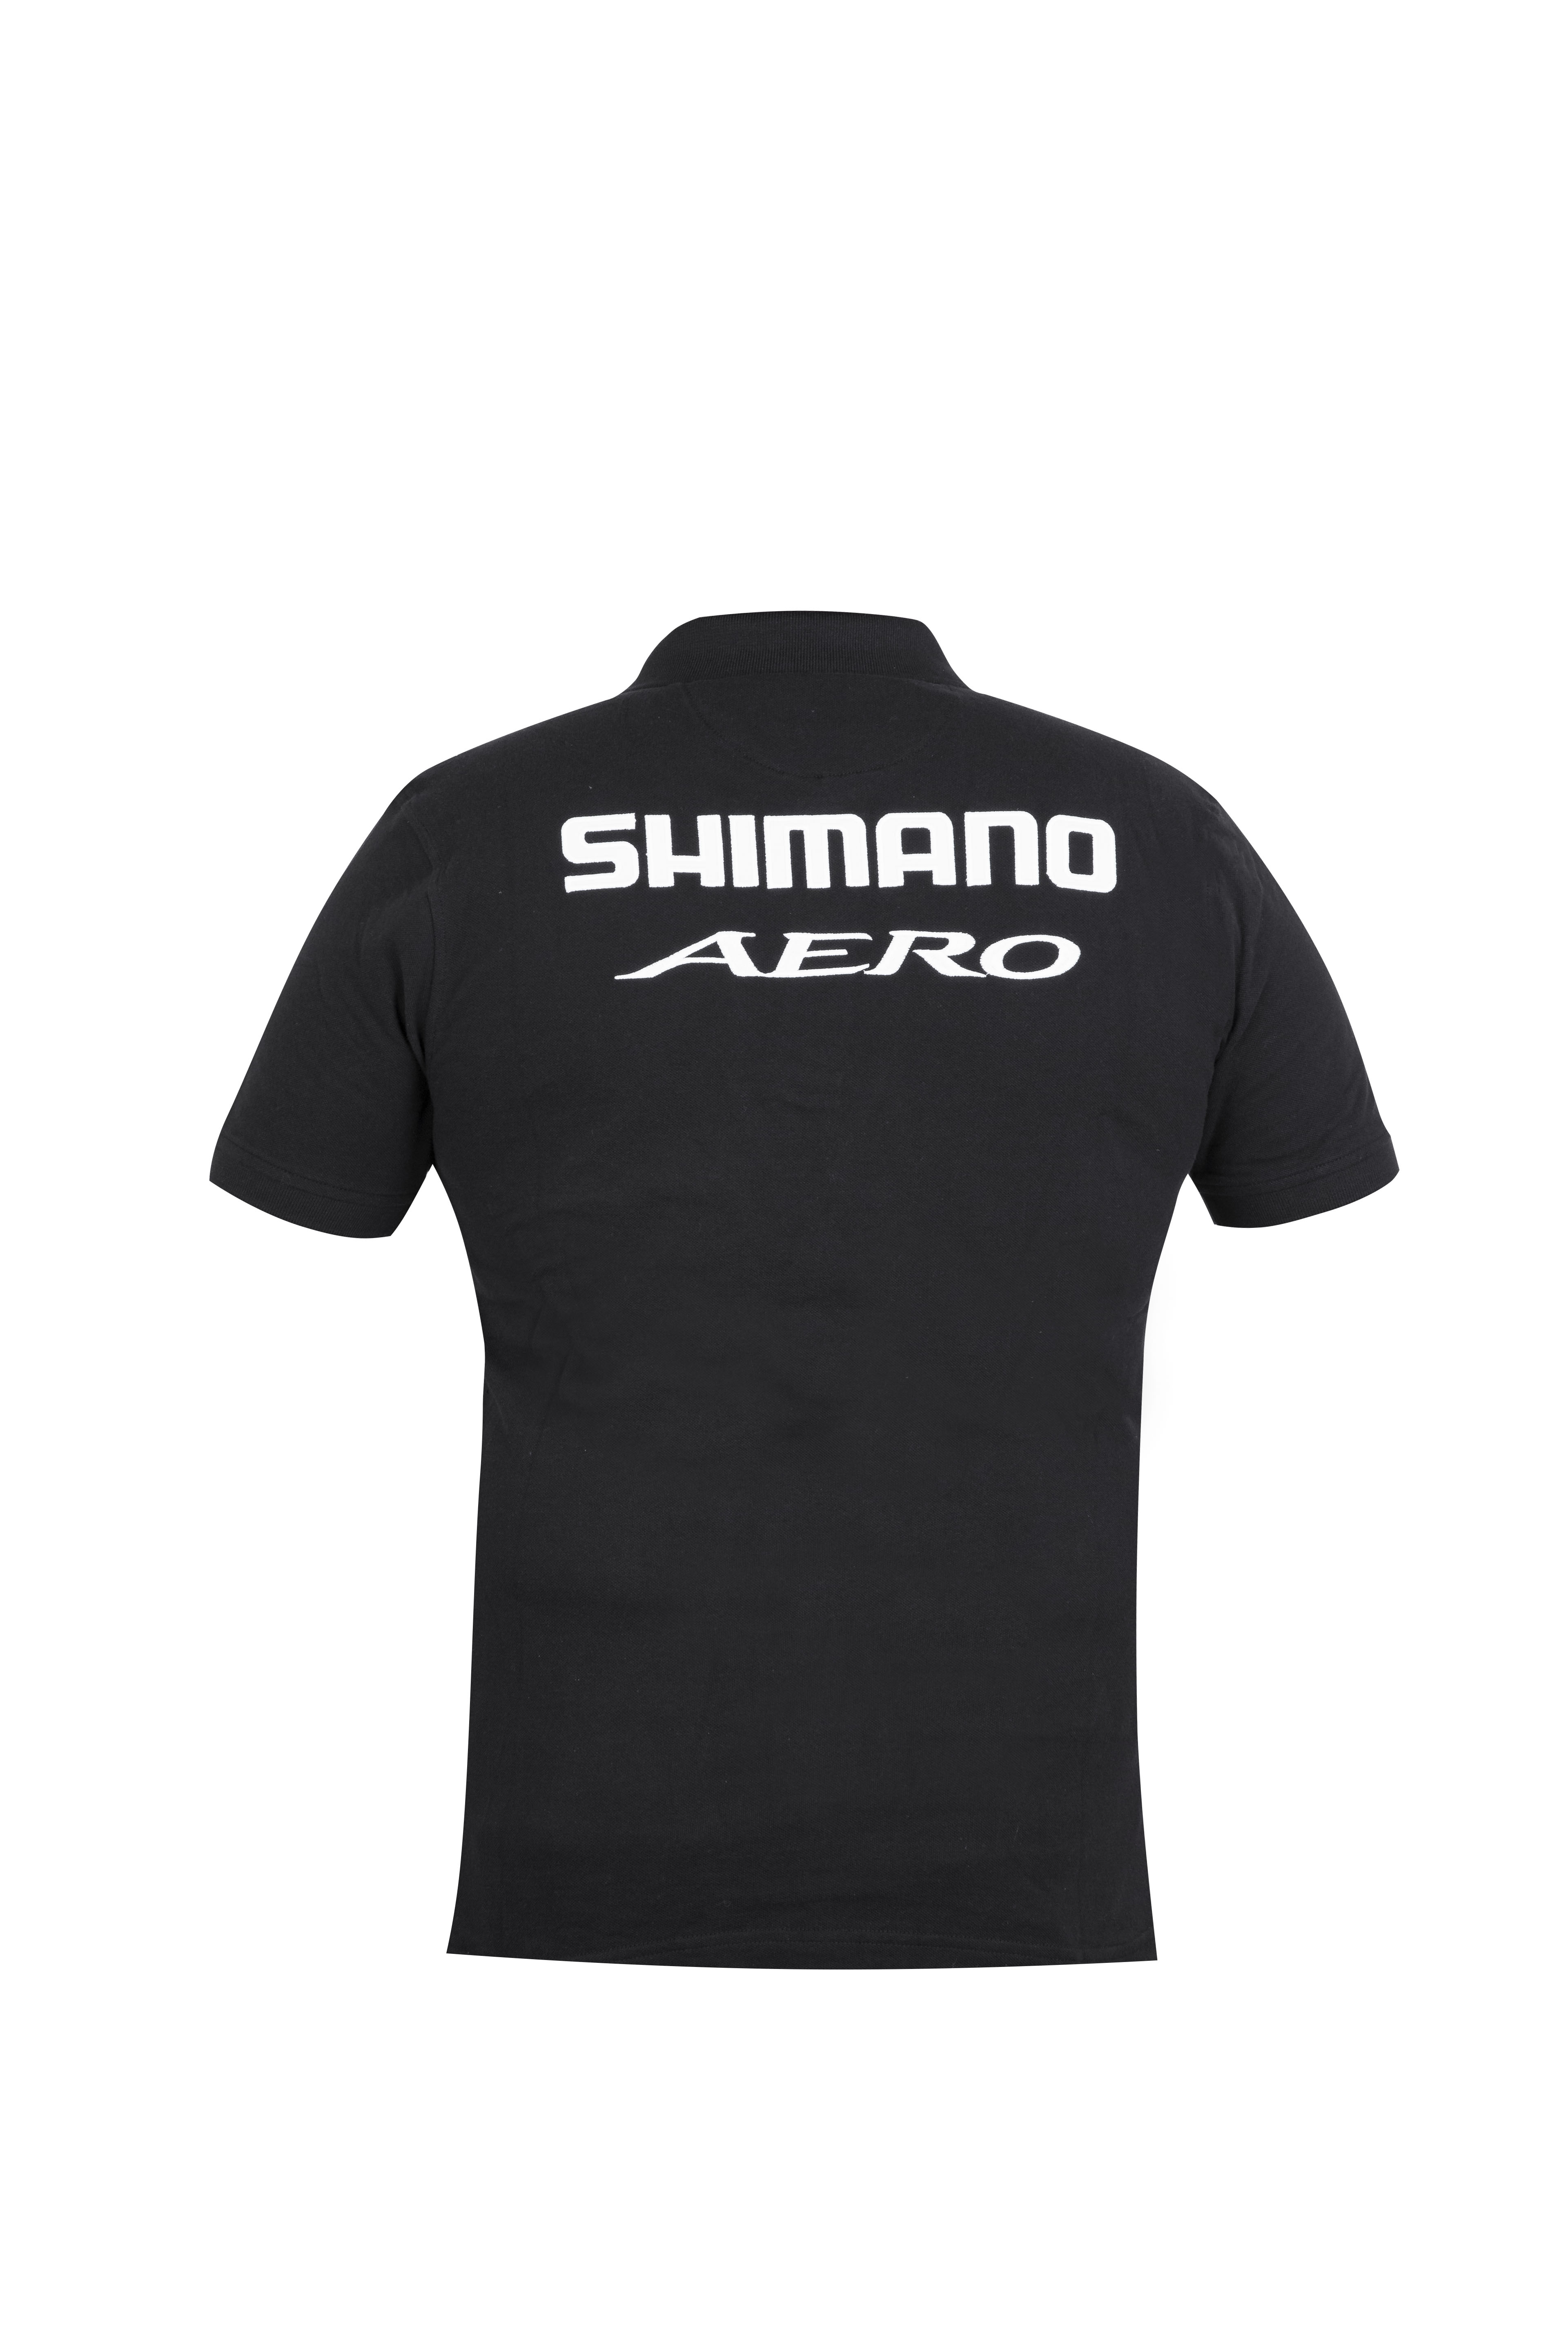 Shimano Aero Polo 2020 Black (multiple sizes)